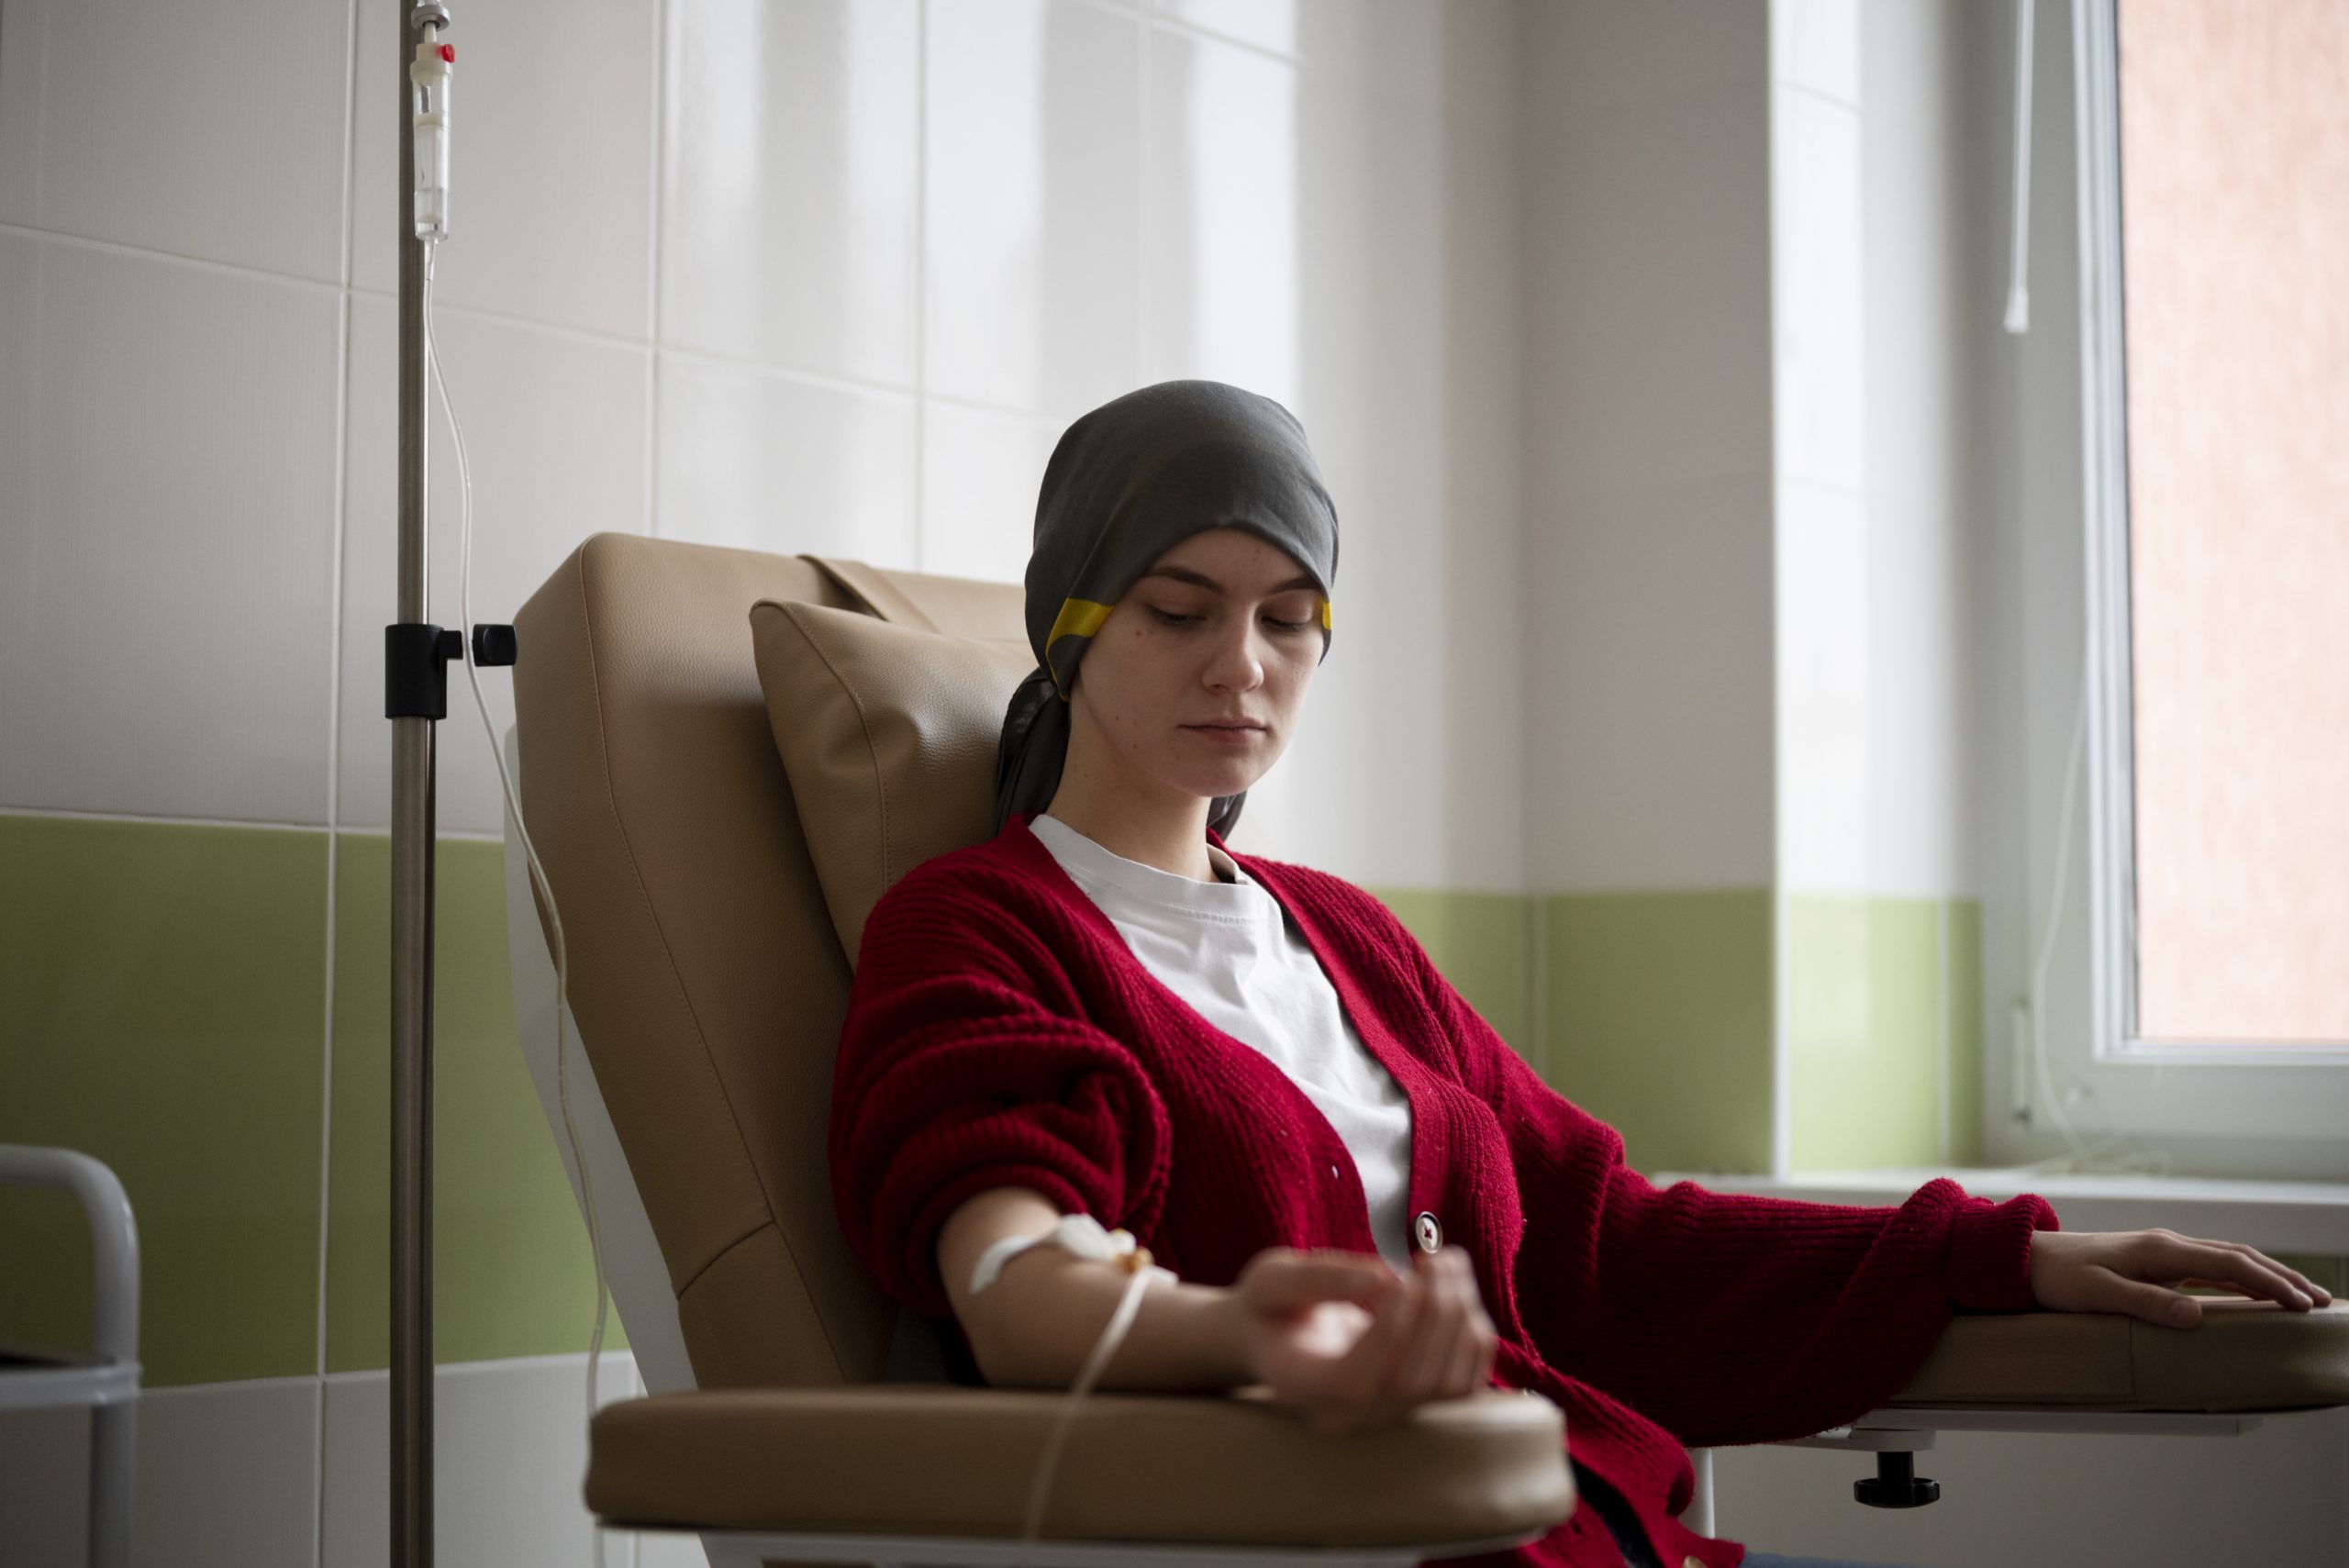 Leukemia treatment resistance could improve